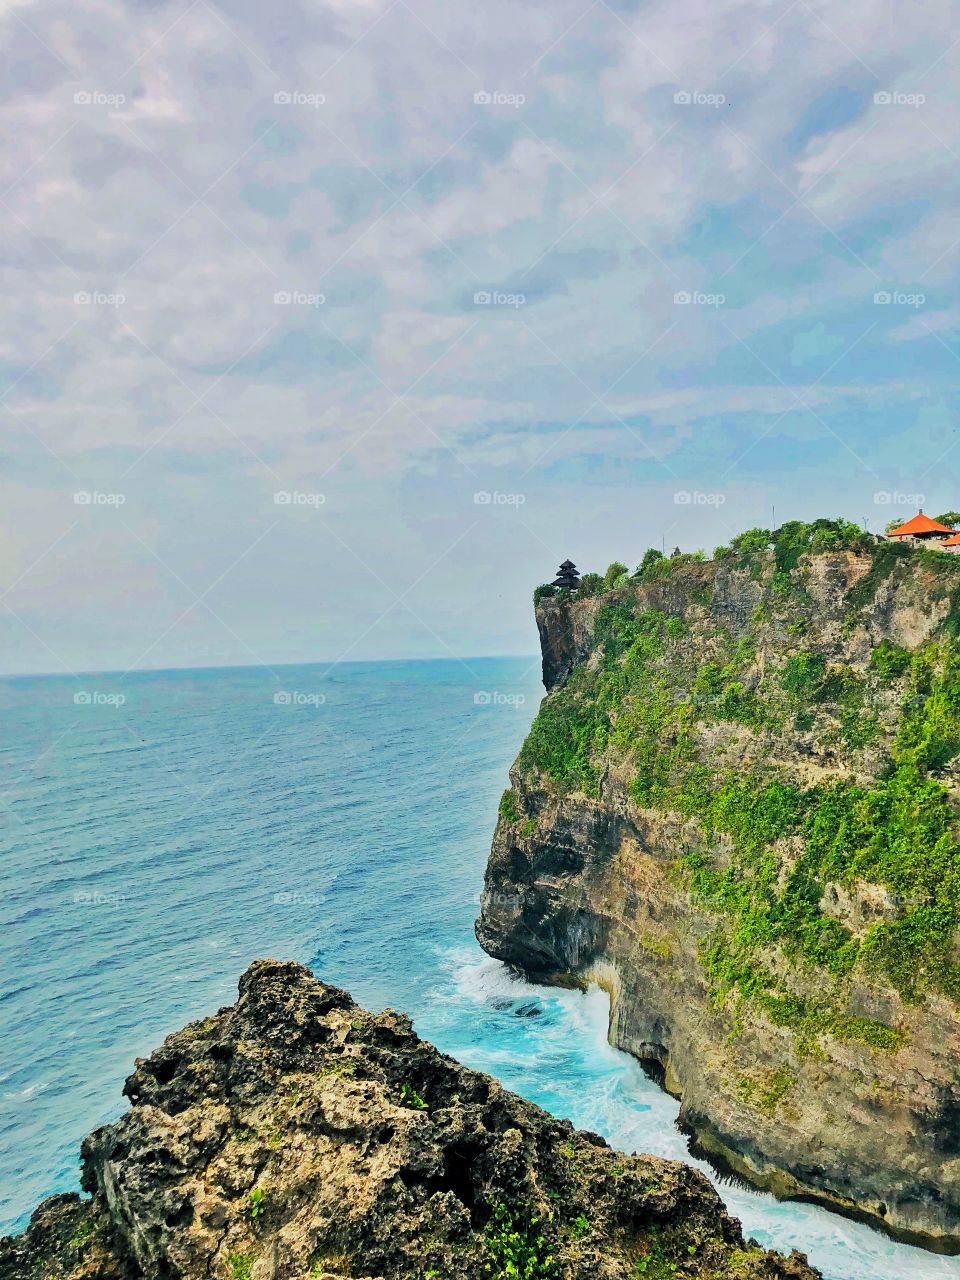 Beautiful Bali. You have my ❤️